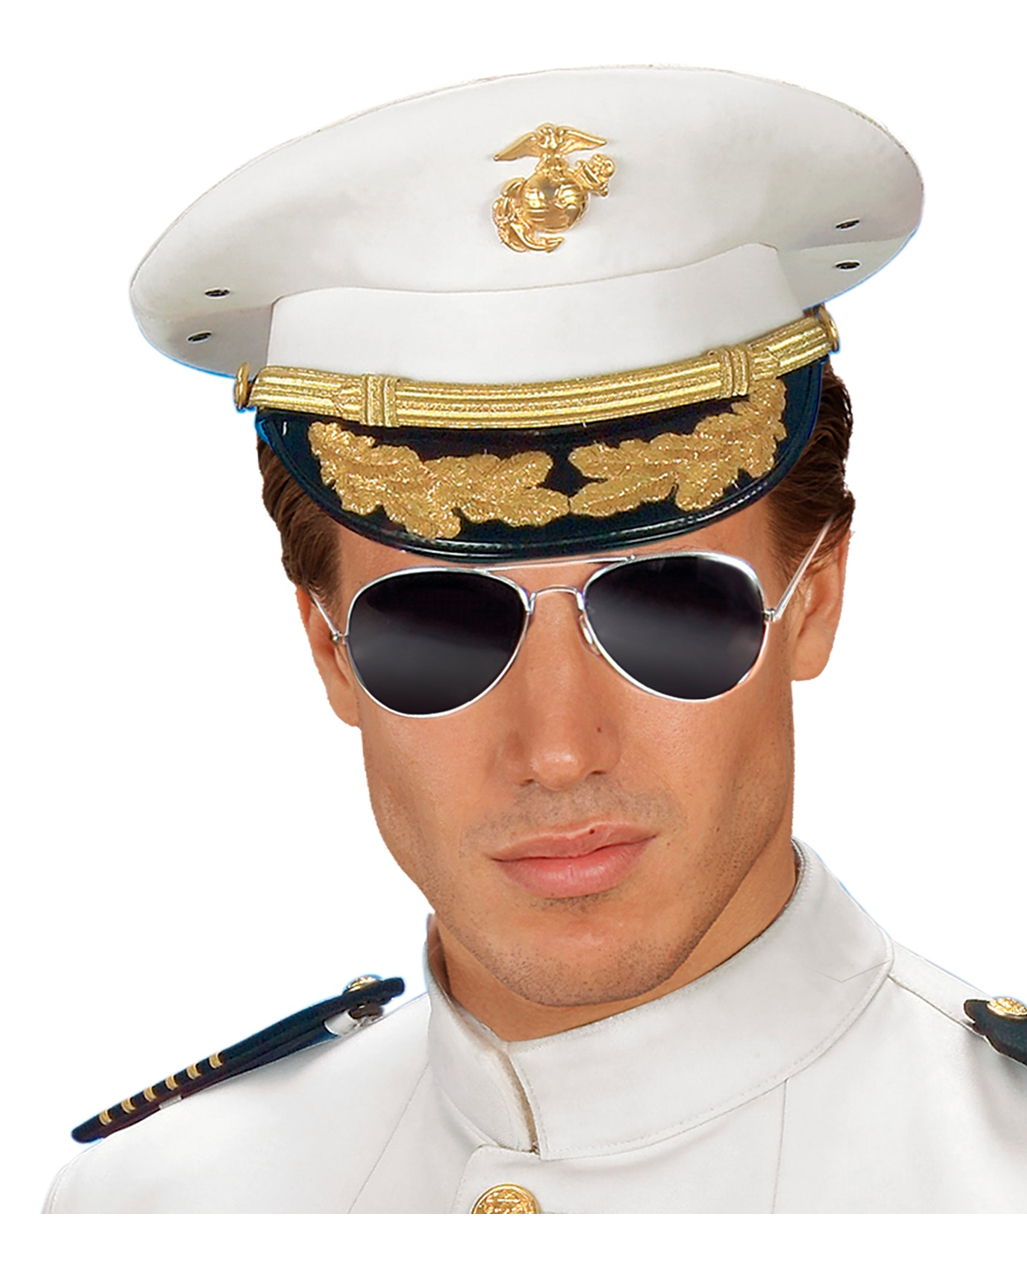 Police / Aviator Sunglasses as a costume accessory